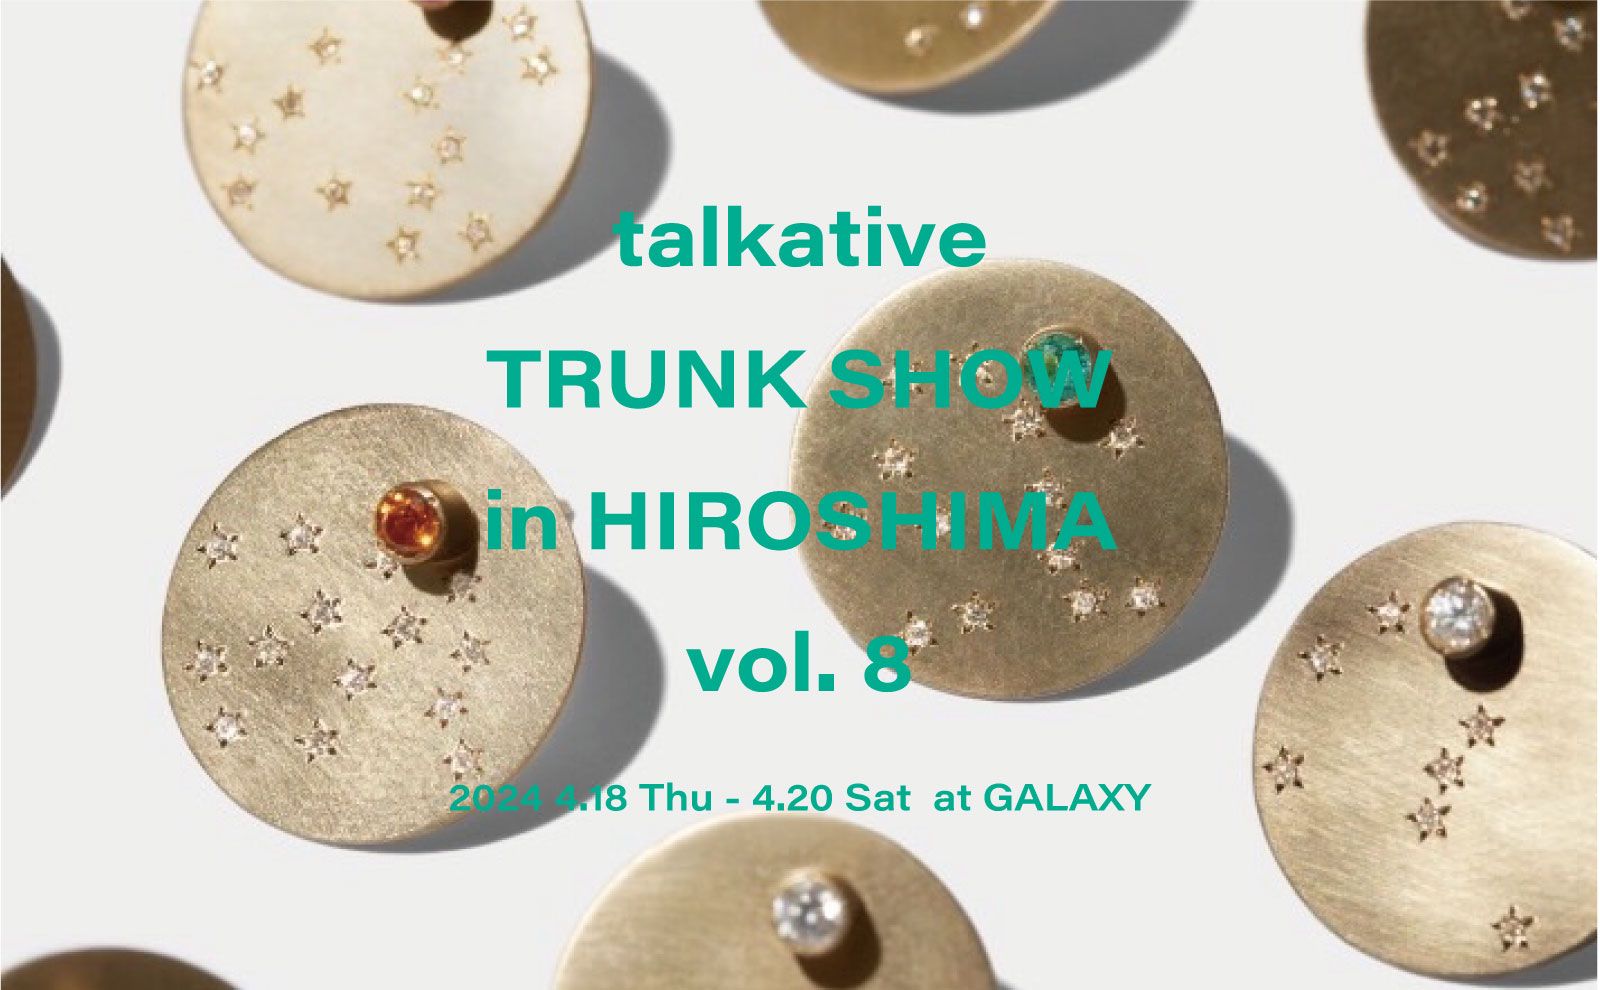 talkative TRUNK SHOW in HIROSHIMA vol. 8